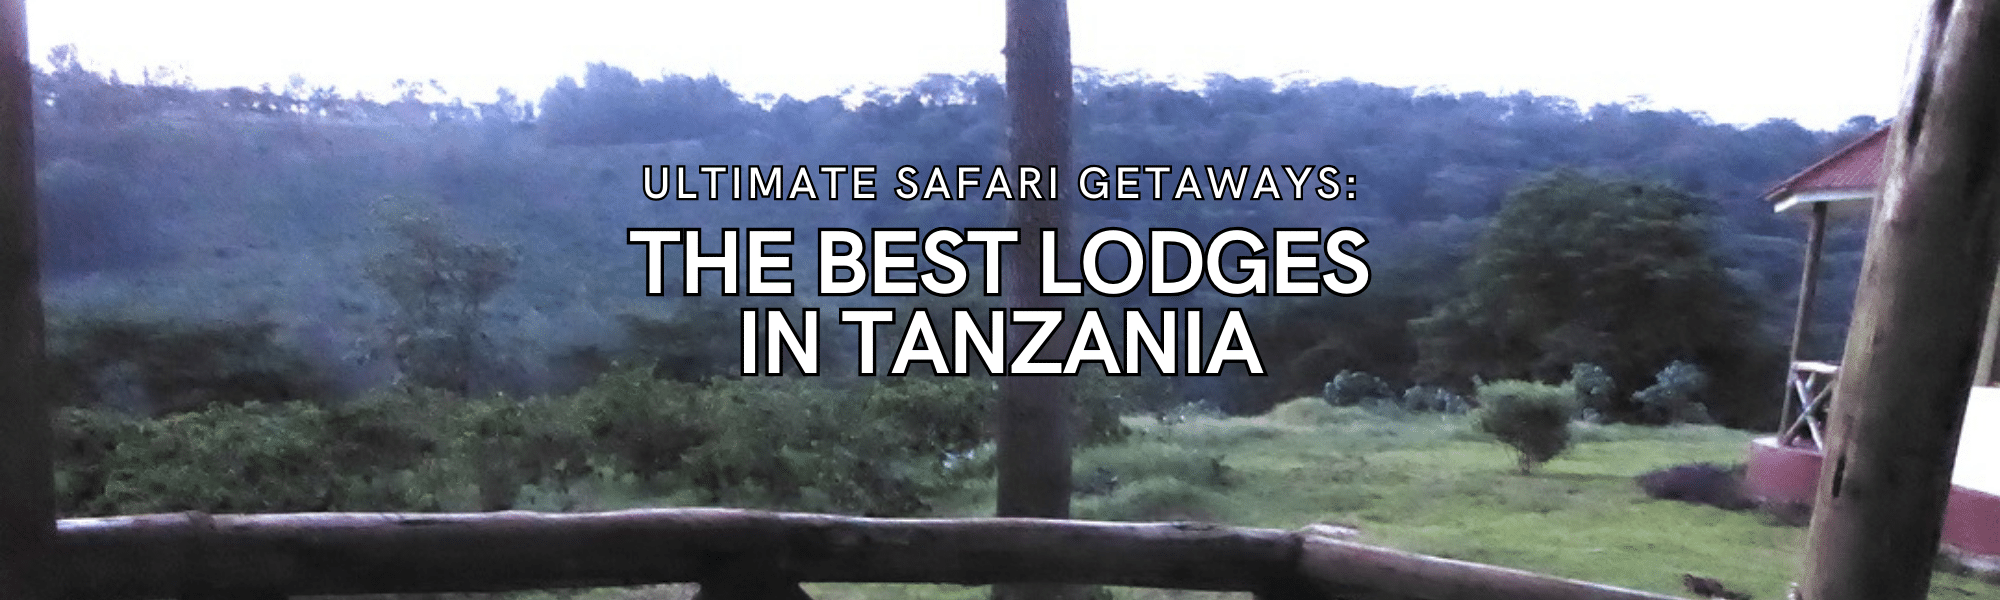 Best Lodges in Tanzania